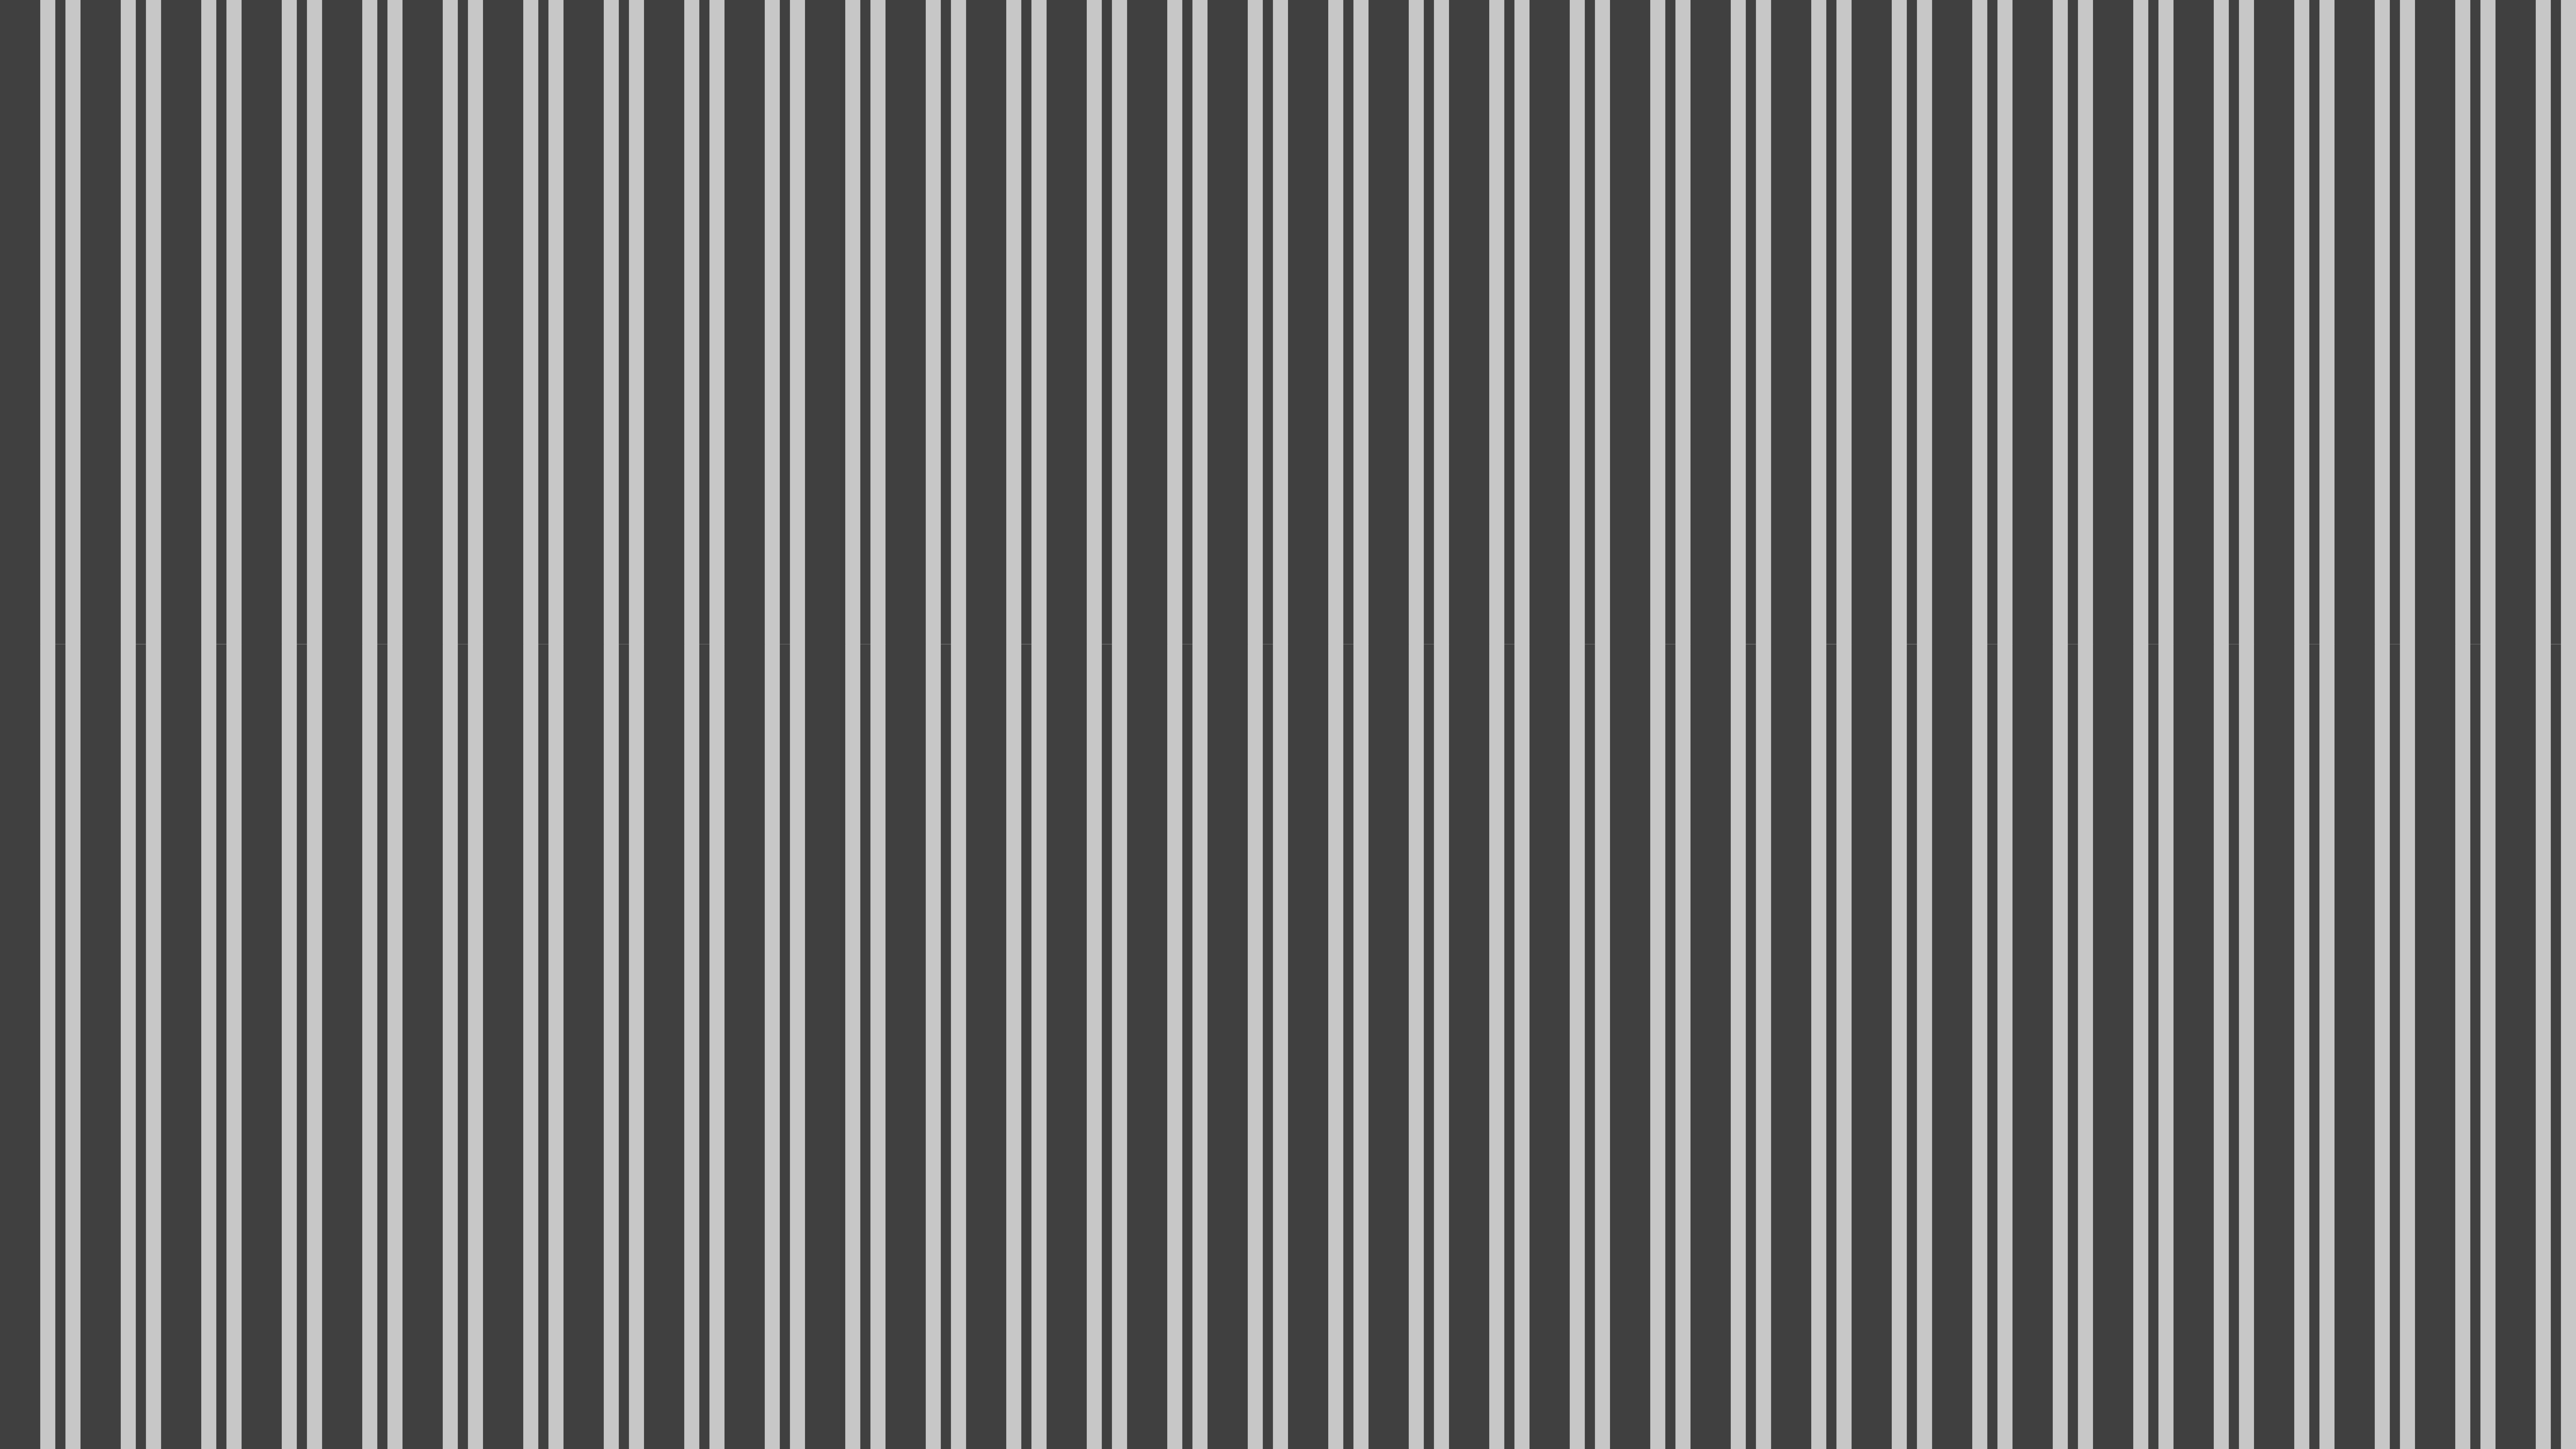 Free Dark Grey Seamless Vertical Stripes Background Pattern Illustration